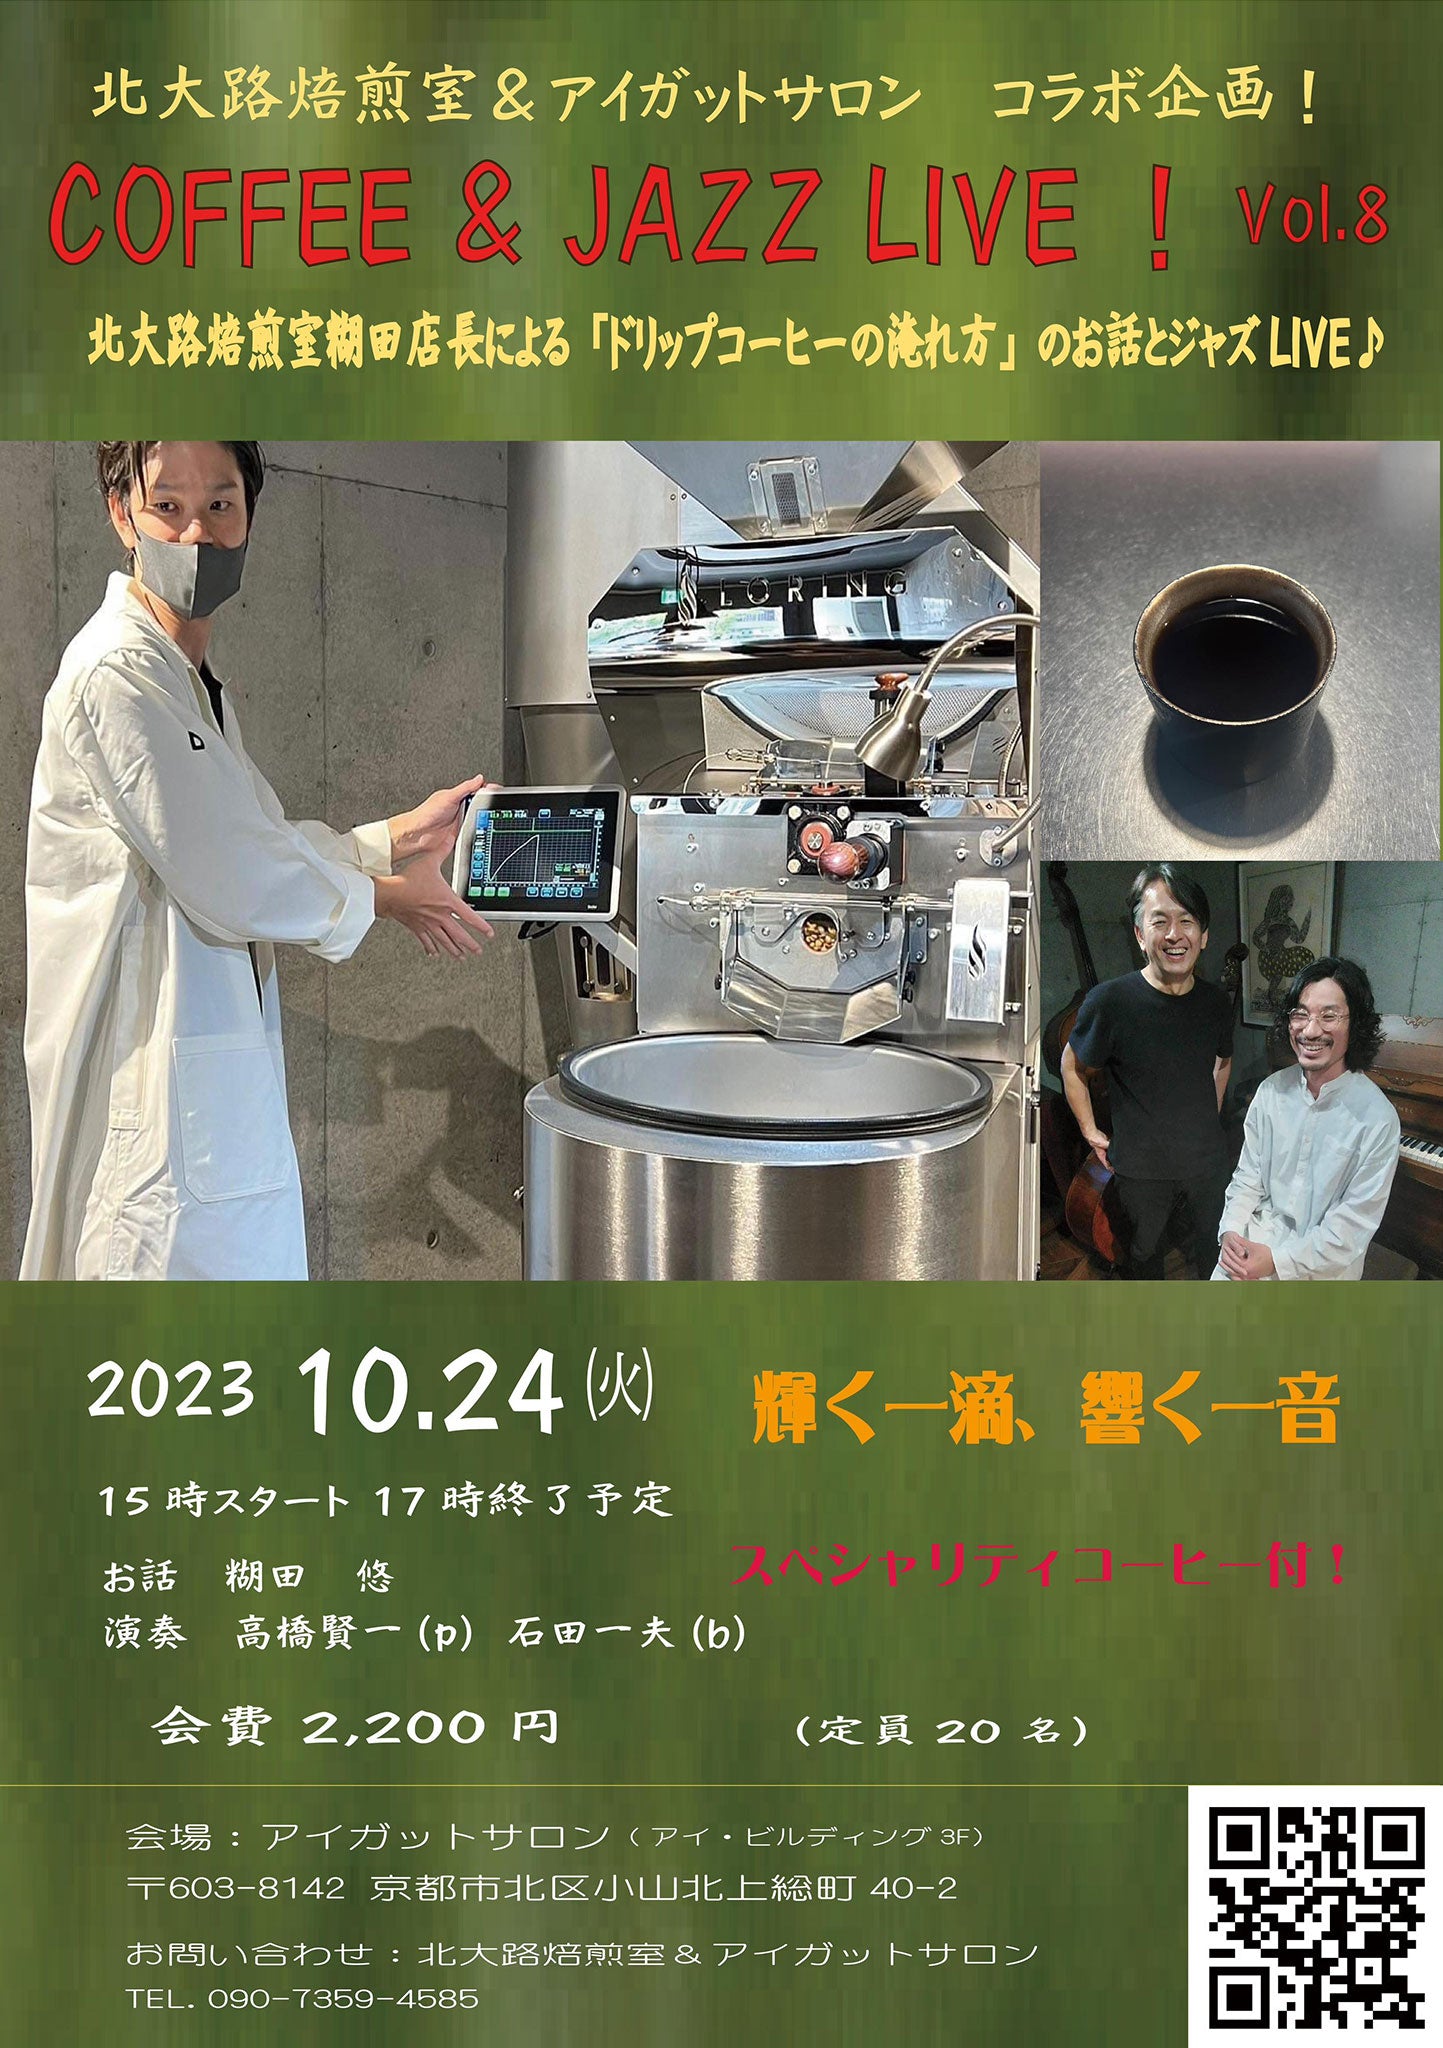 COFFE & JAZZ LIVE ! VOL.8 -2023.10.24